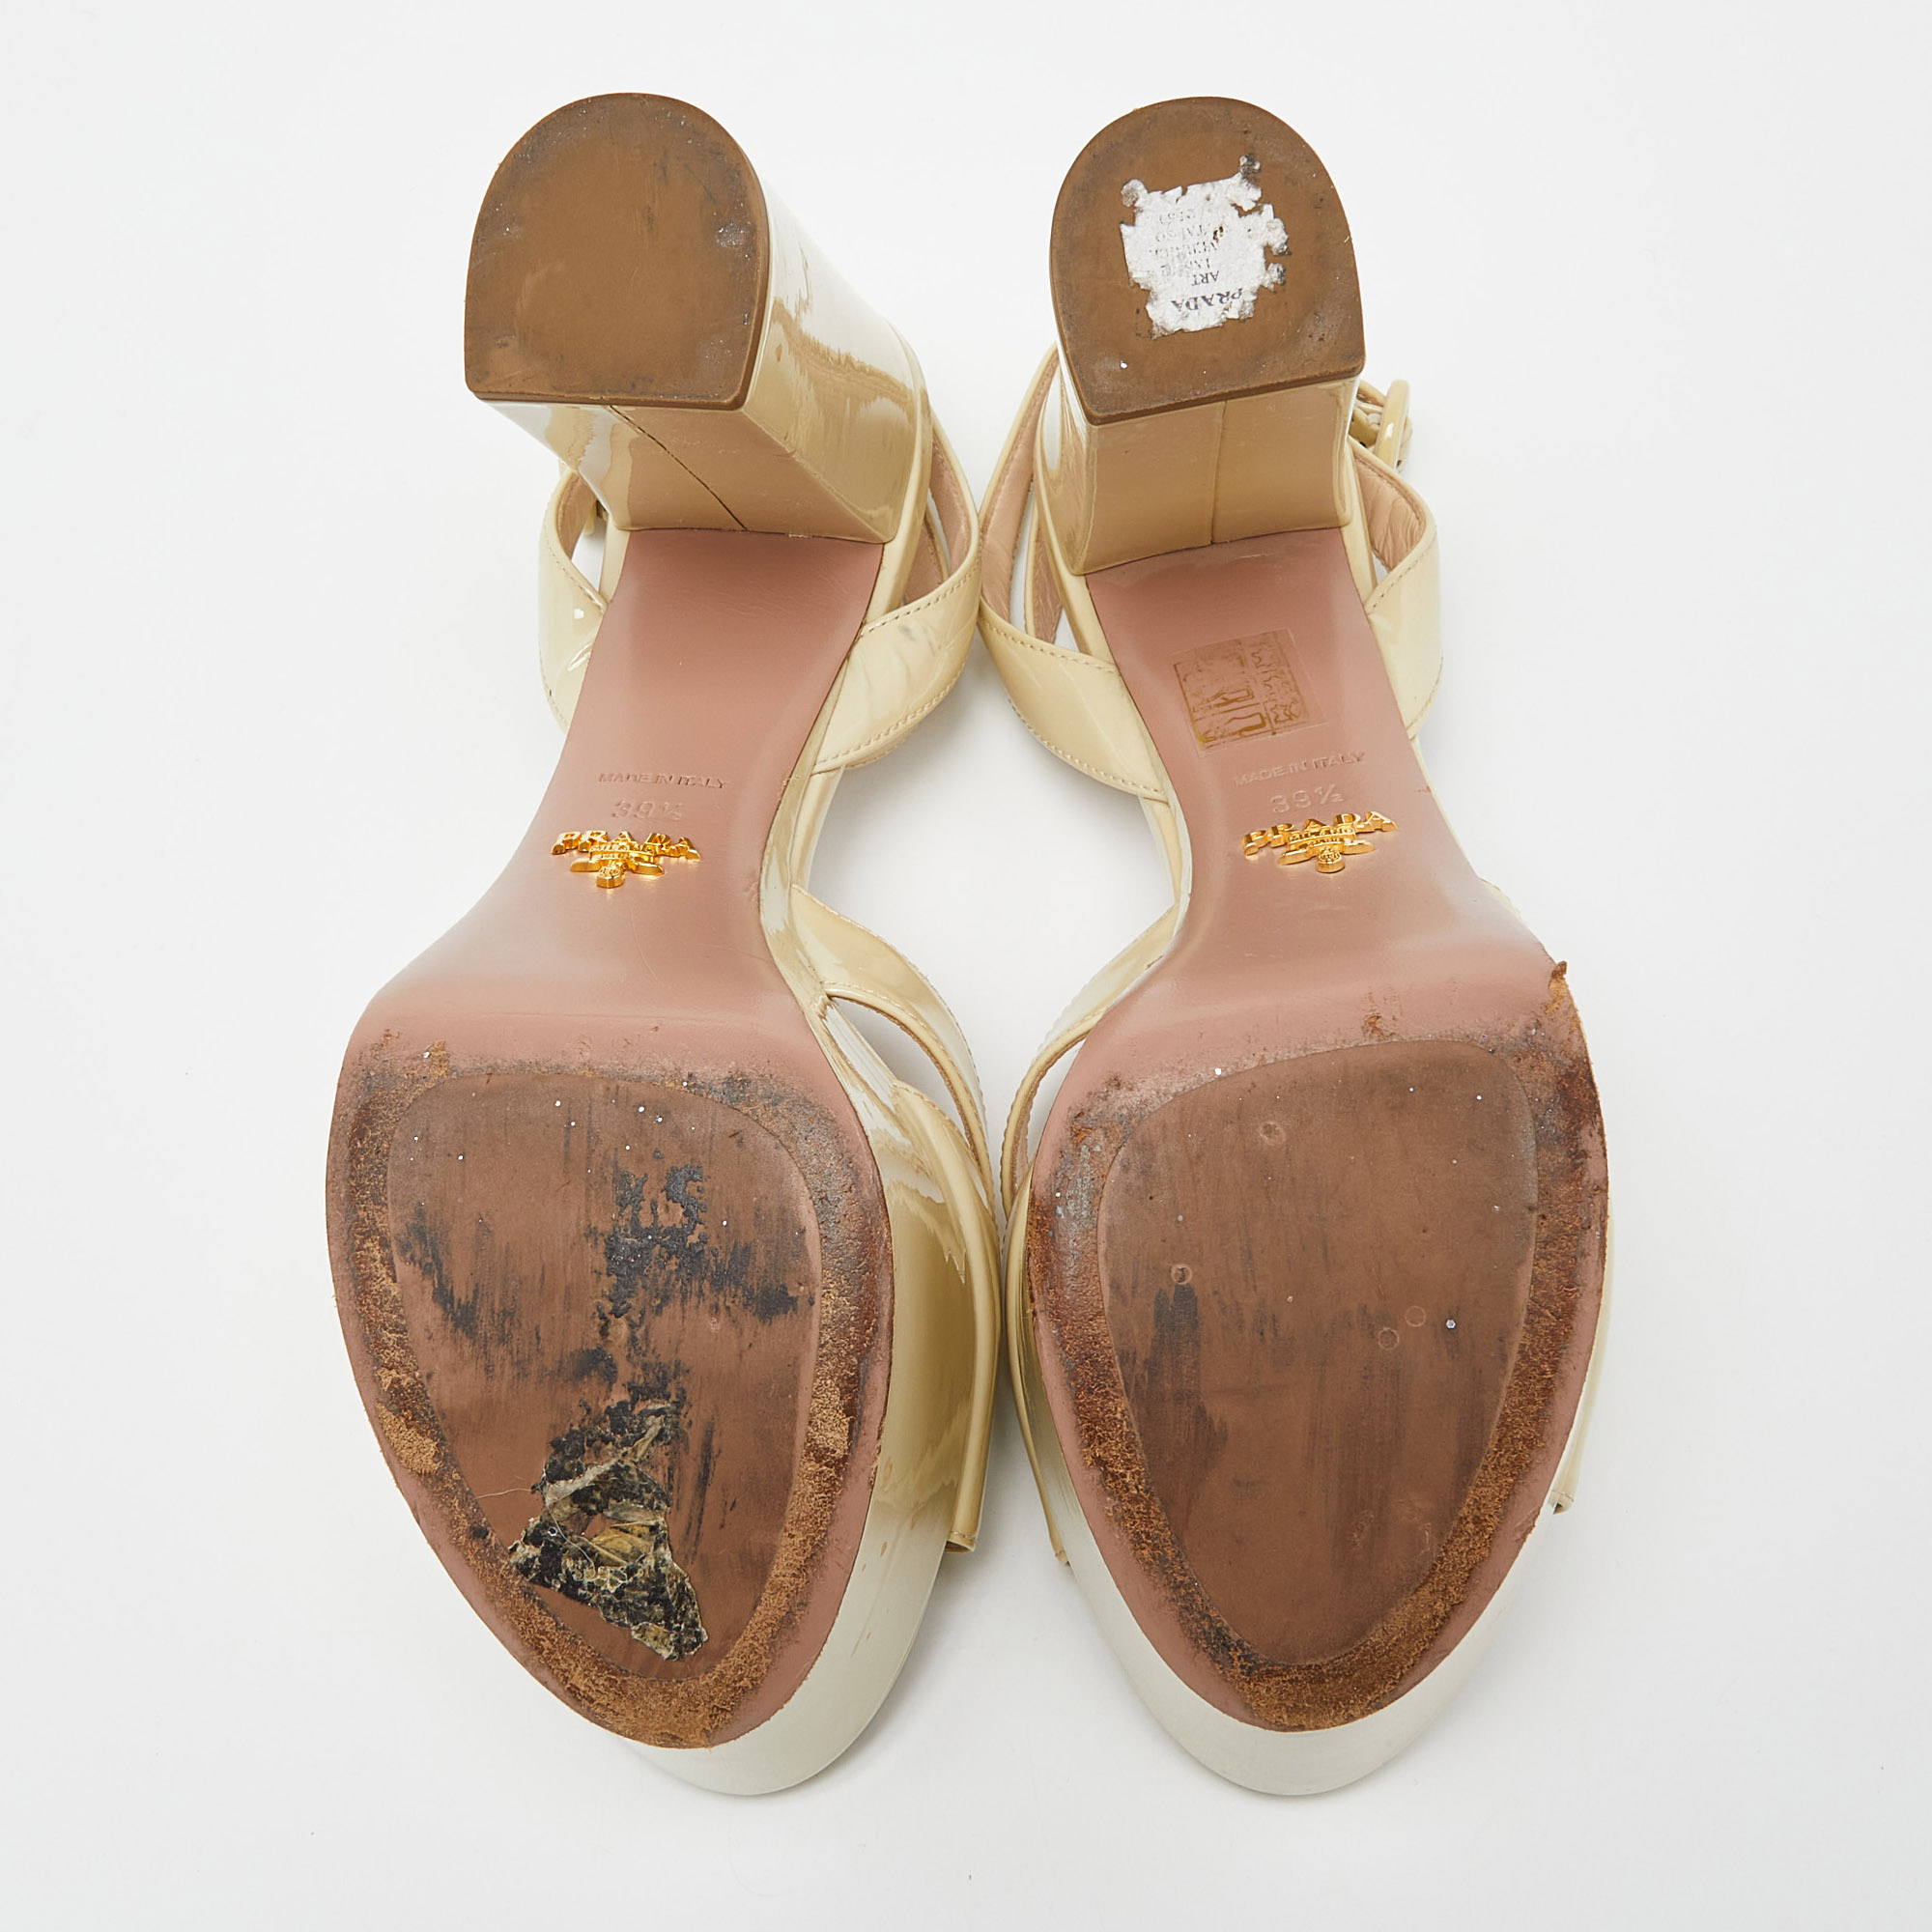 Prada Beige Patent Leather Platform Ankle Strap Sandals Size 37.5